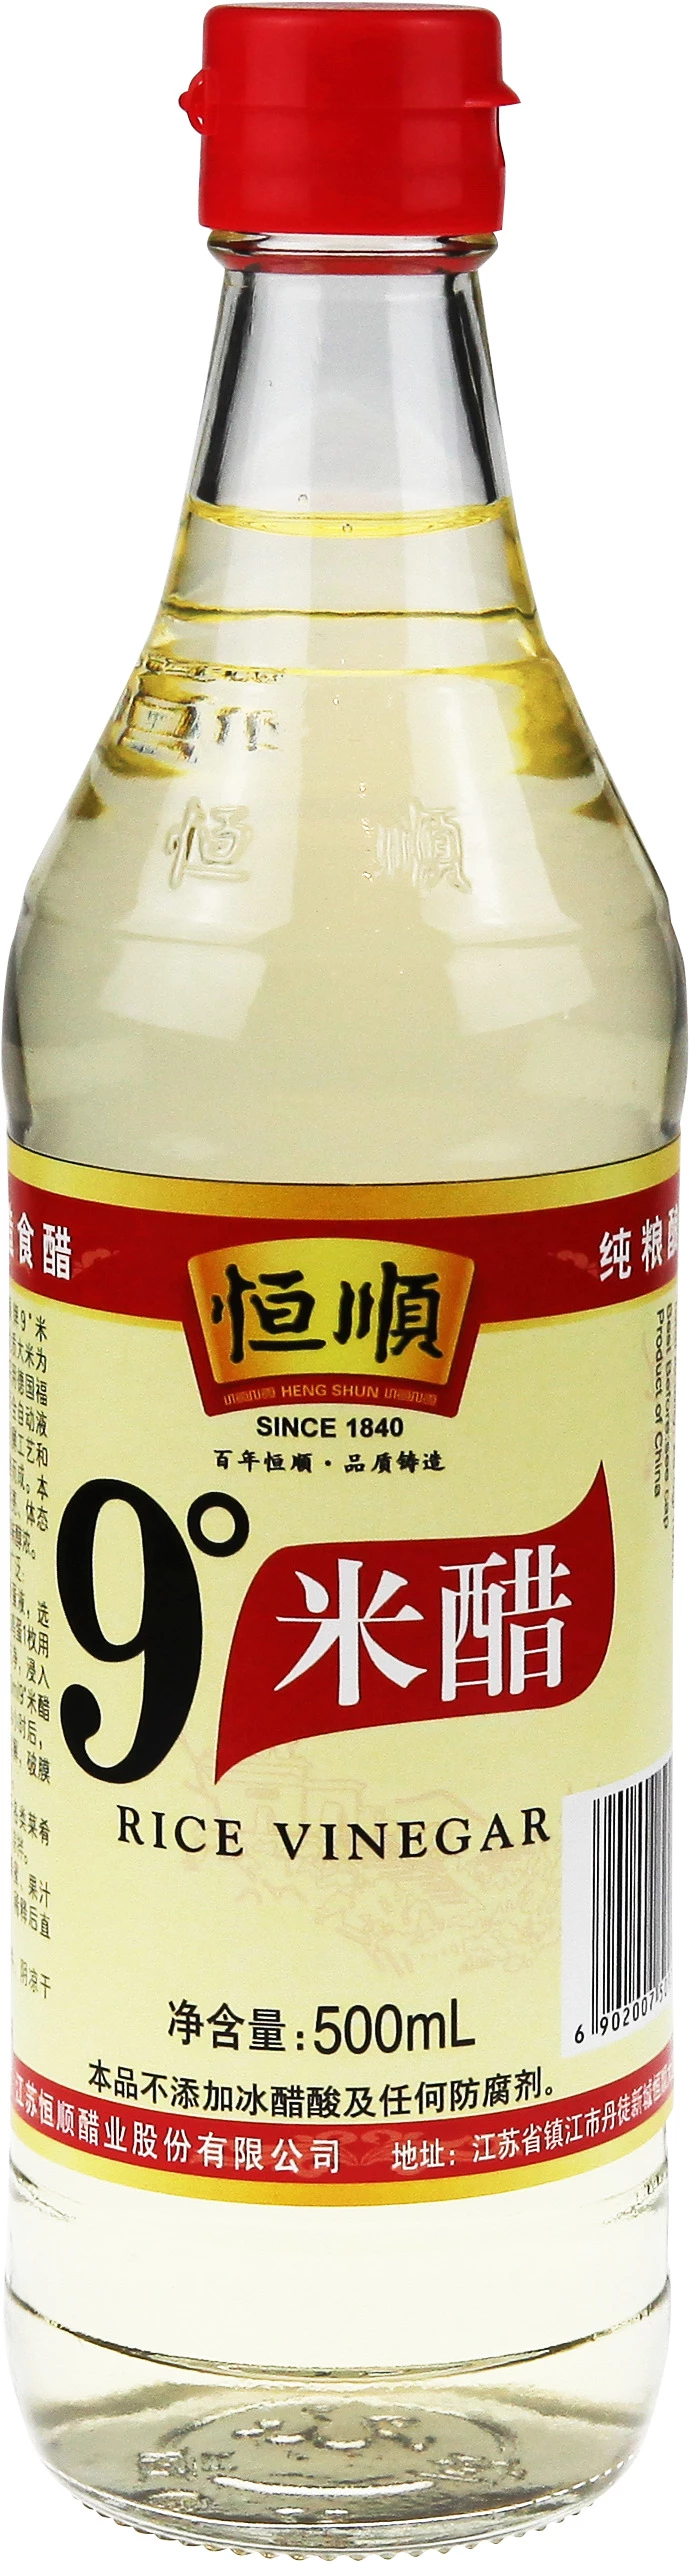 White Rice Vinegar 12 X 500 Ml - Heng Shun